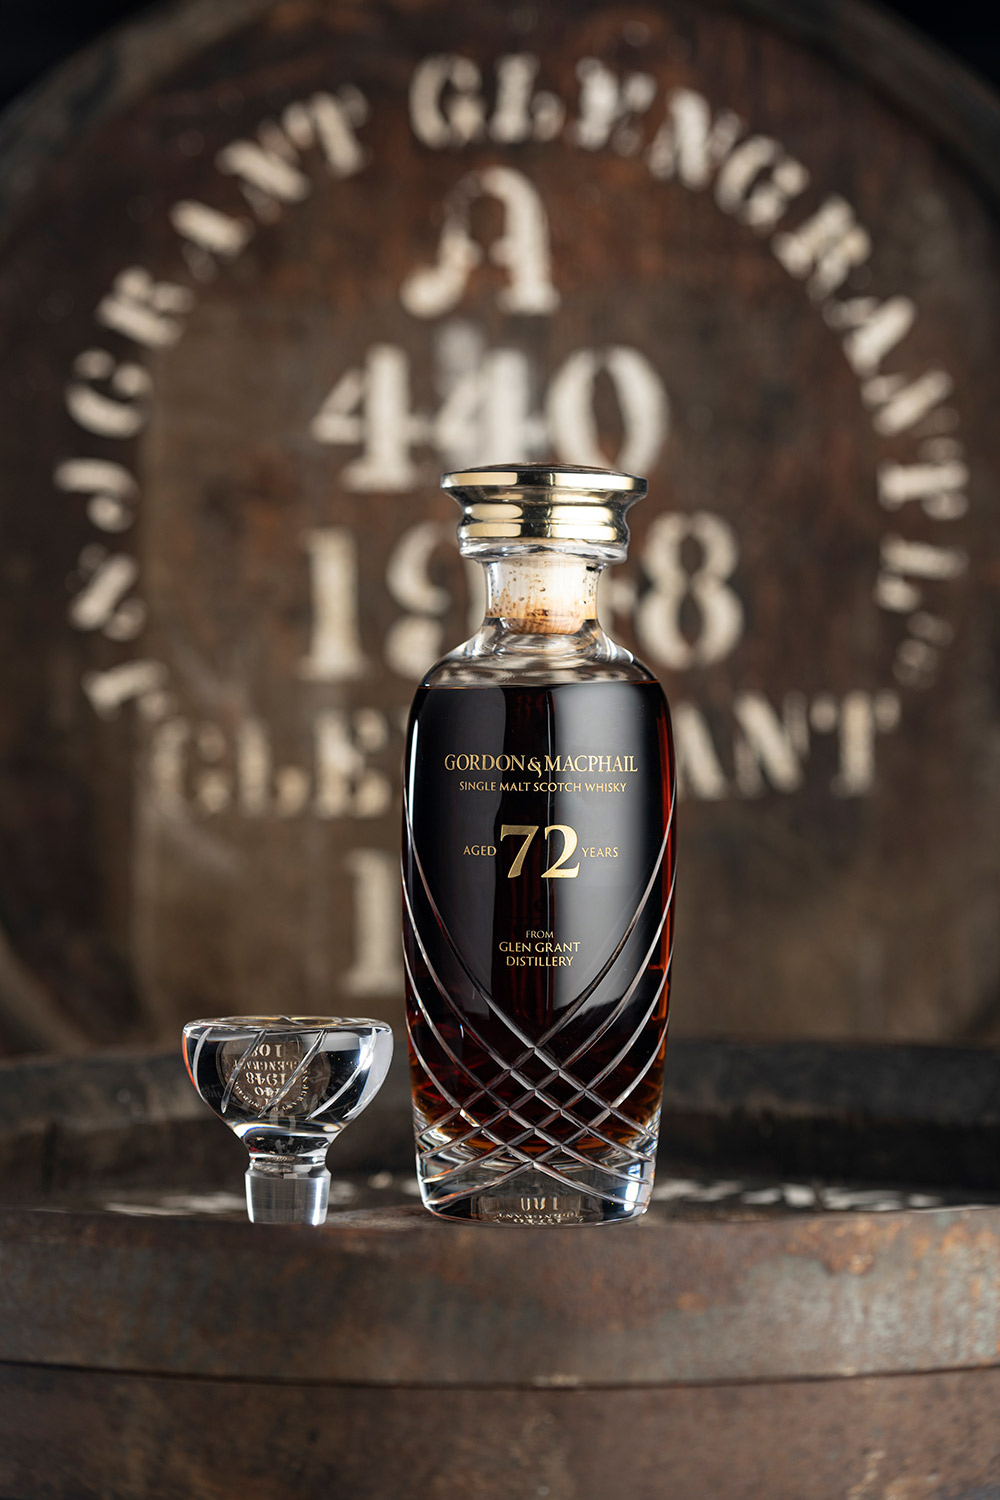 Gordon & MacPhail has bottled a Glen Grant Scotch whisky from 1948